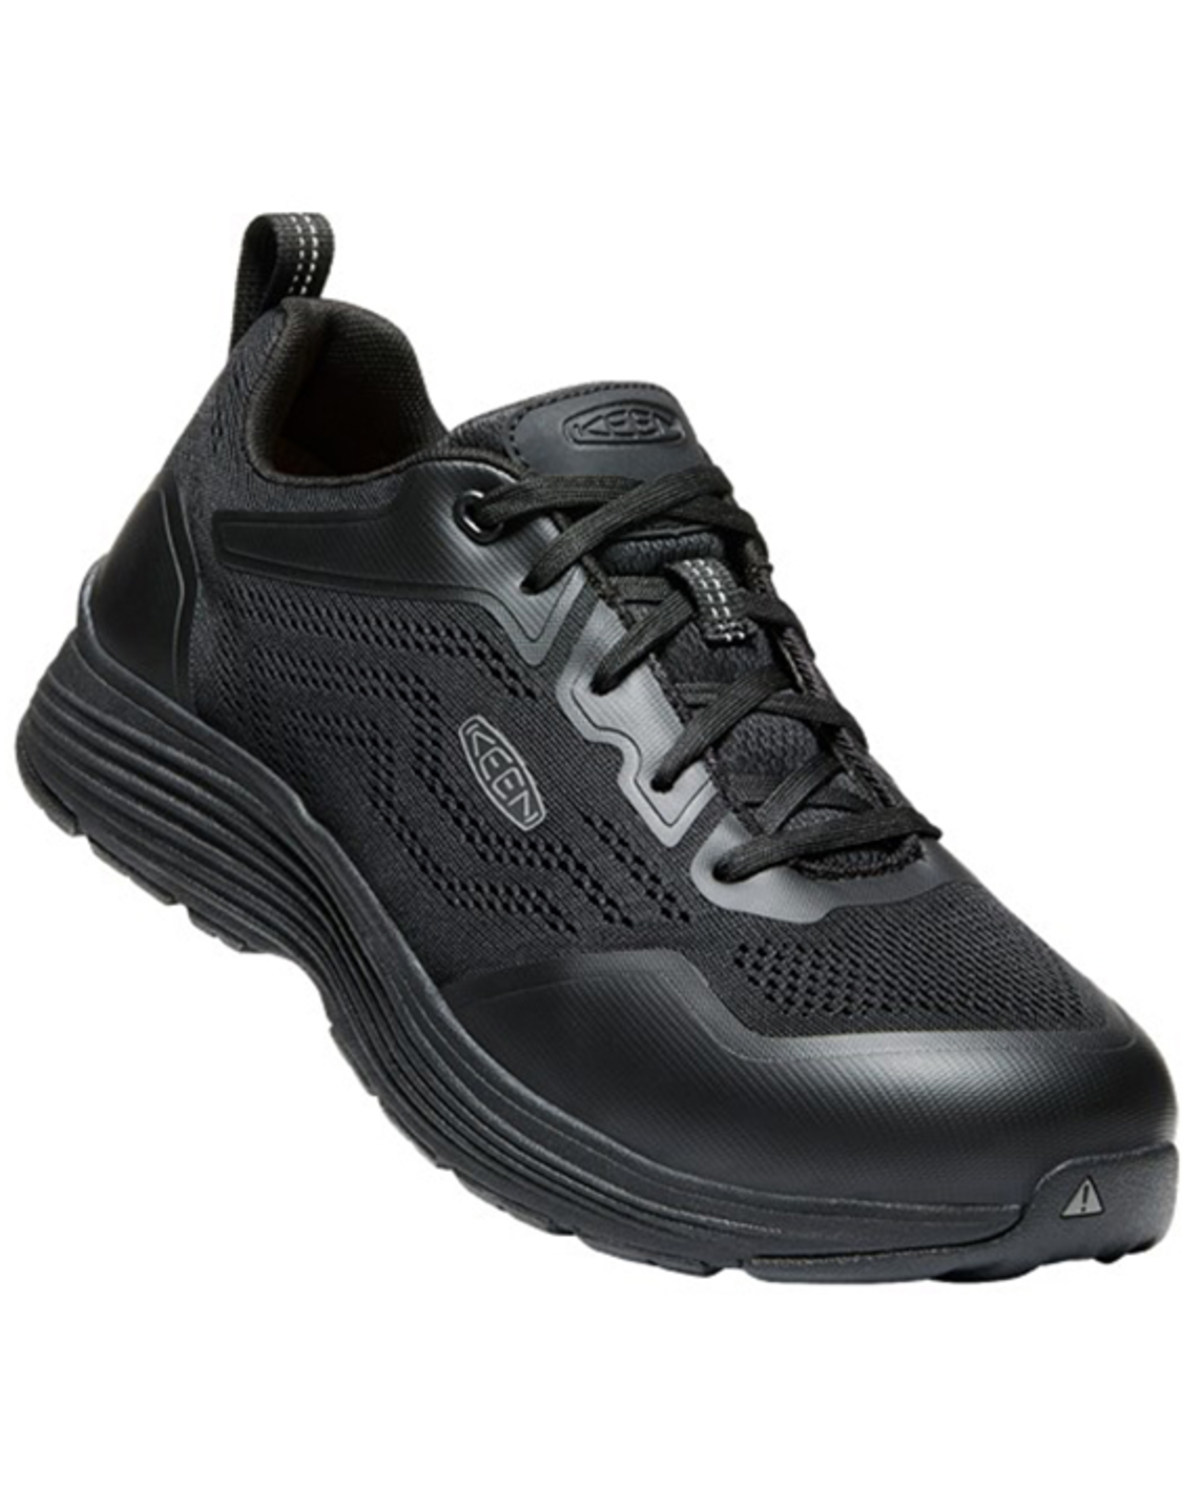 Keen Men's Sparta II Lacer Work Shoes - Aluminum Toe